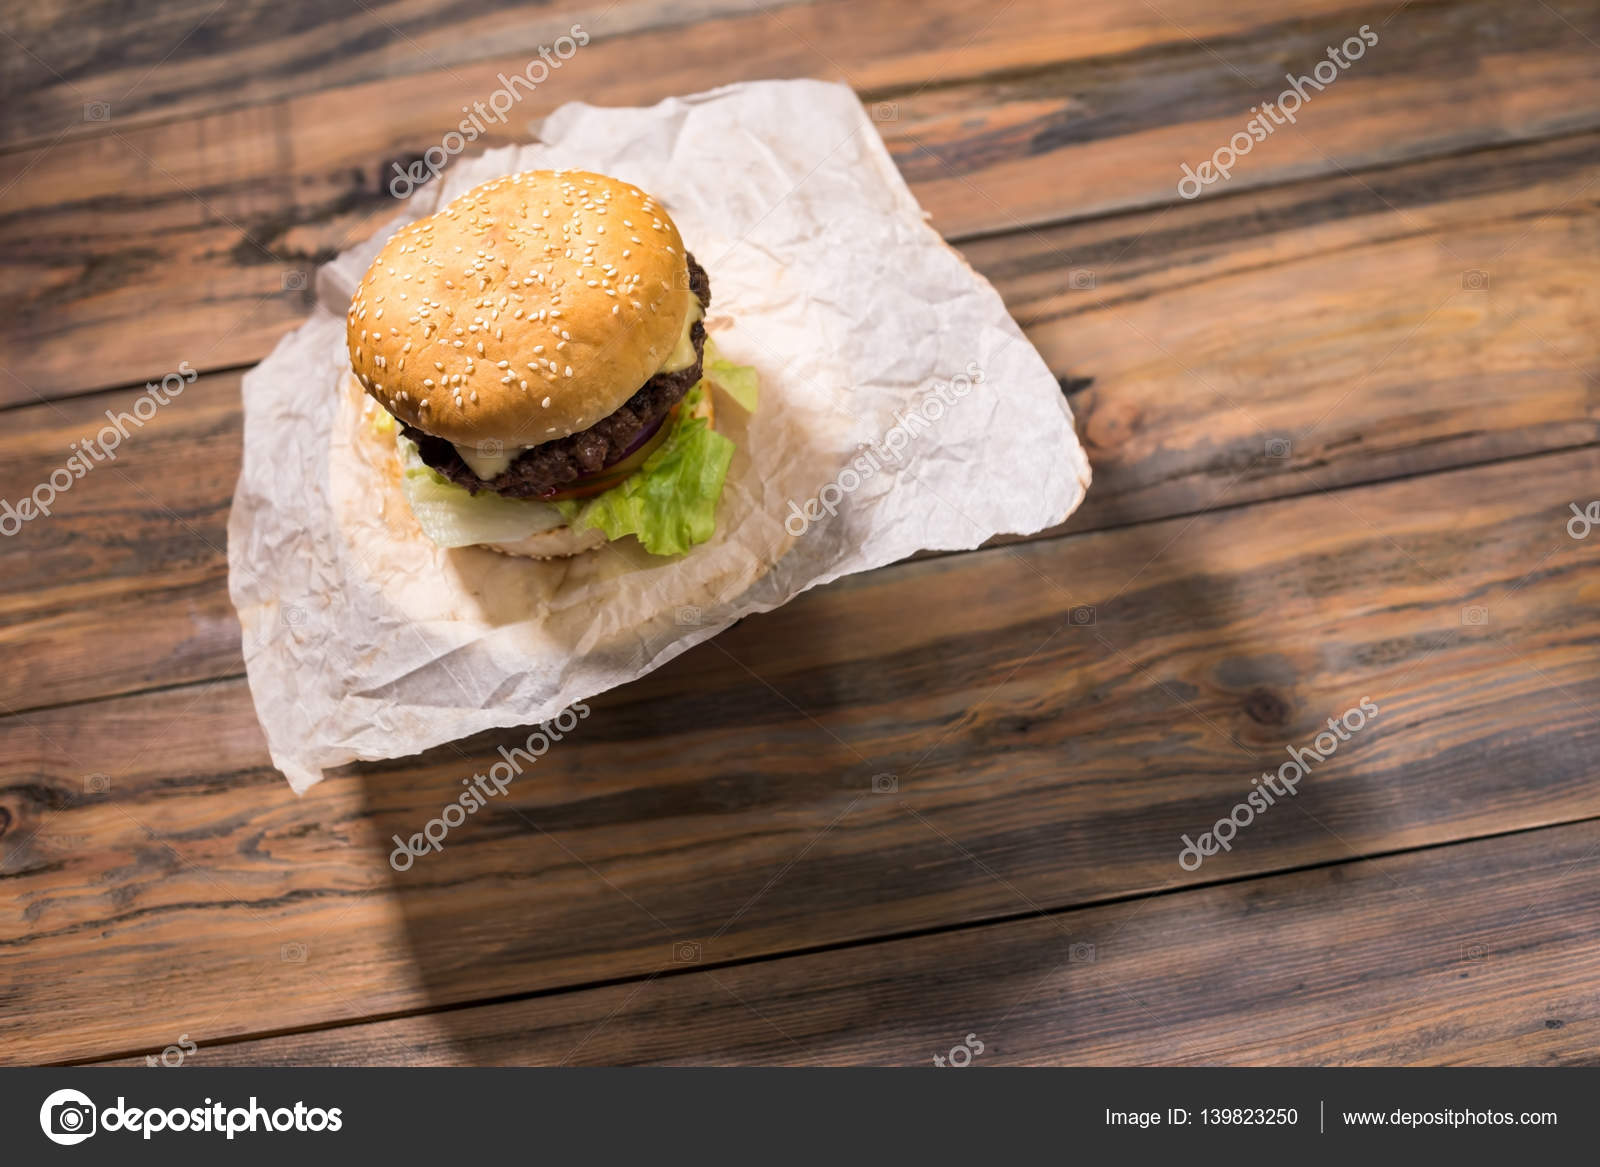 Burger on wooden background. — Stock Photo © Denisfilm #139823250